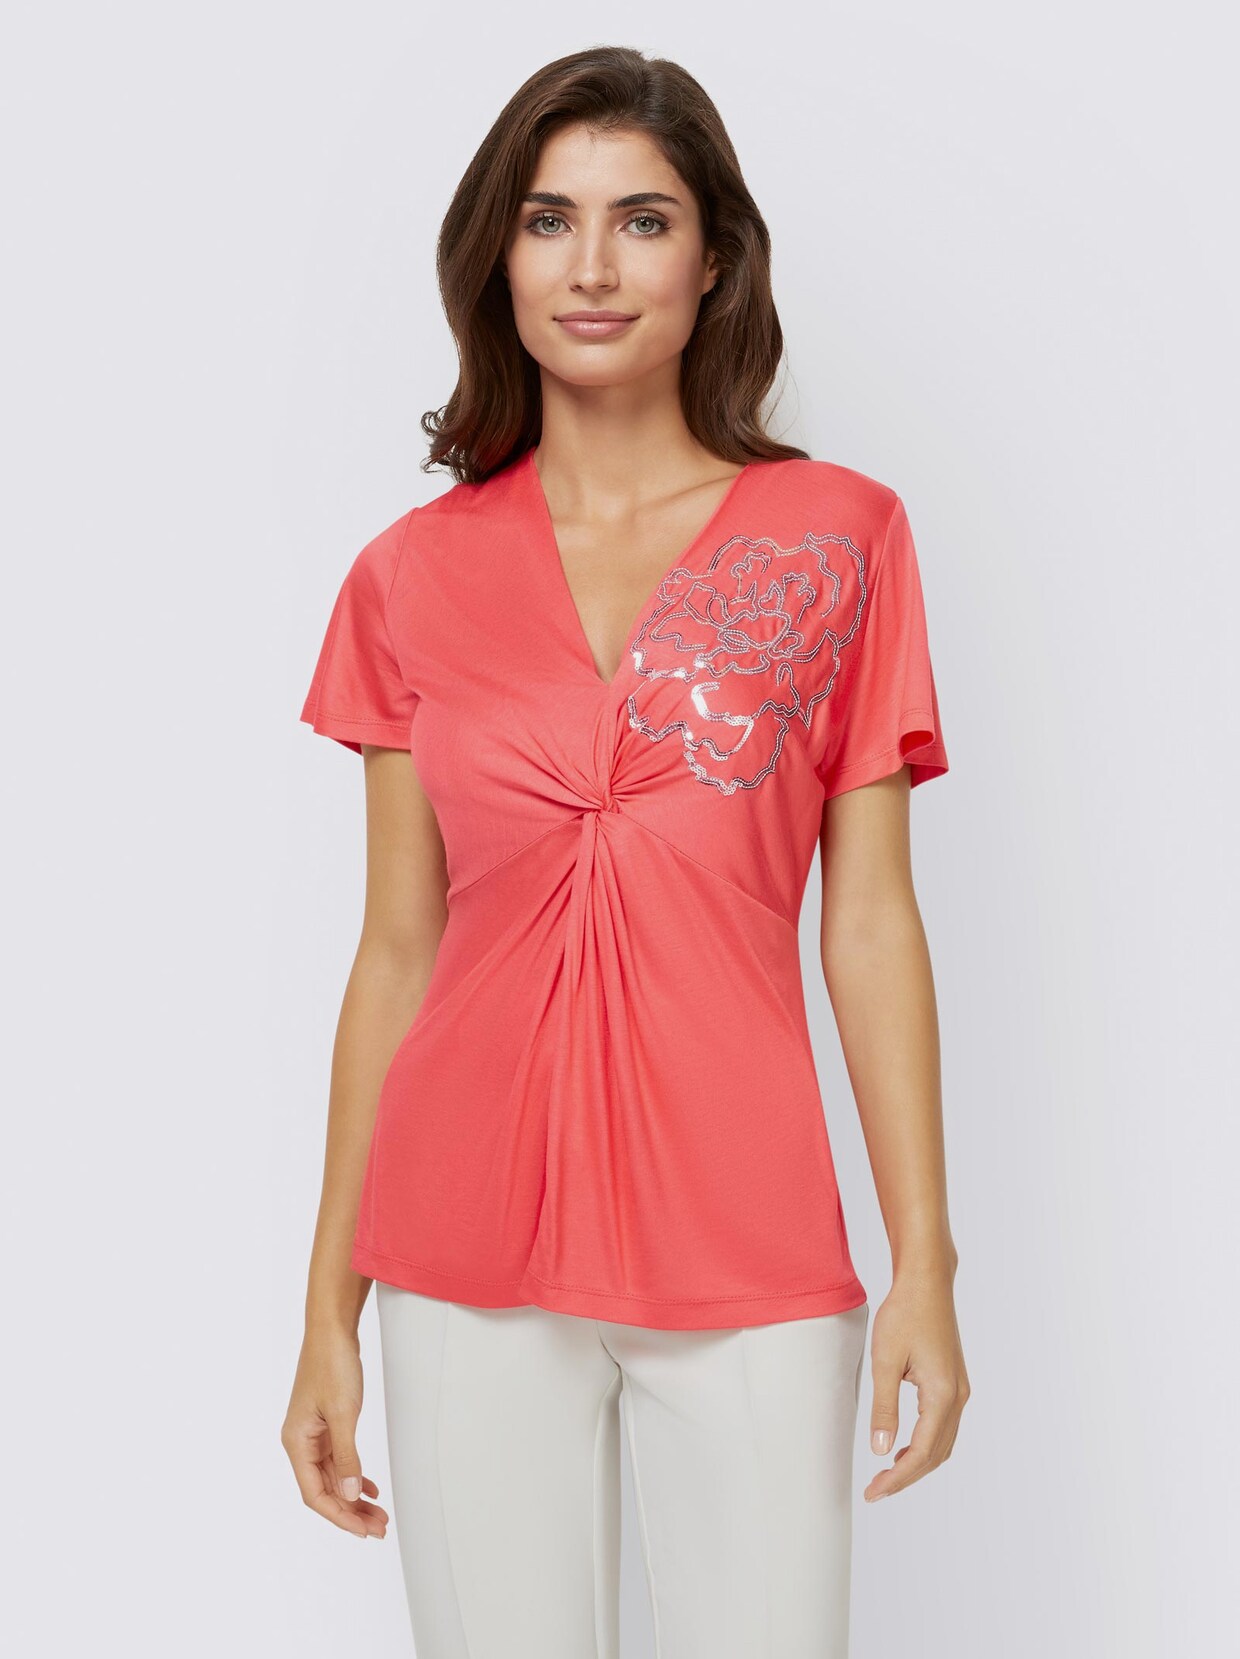 Ashley Brooke Shirt - hummer